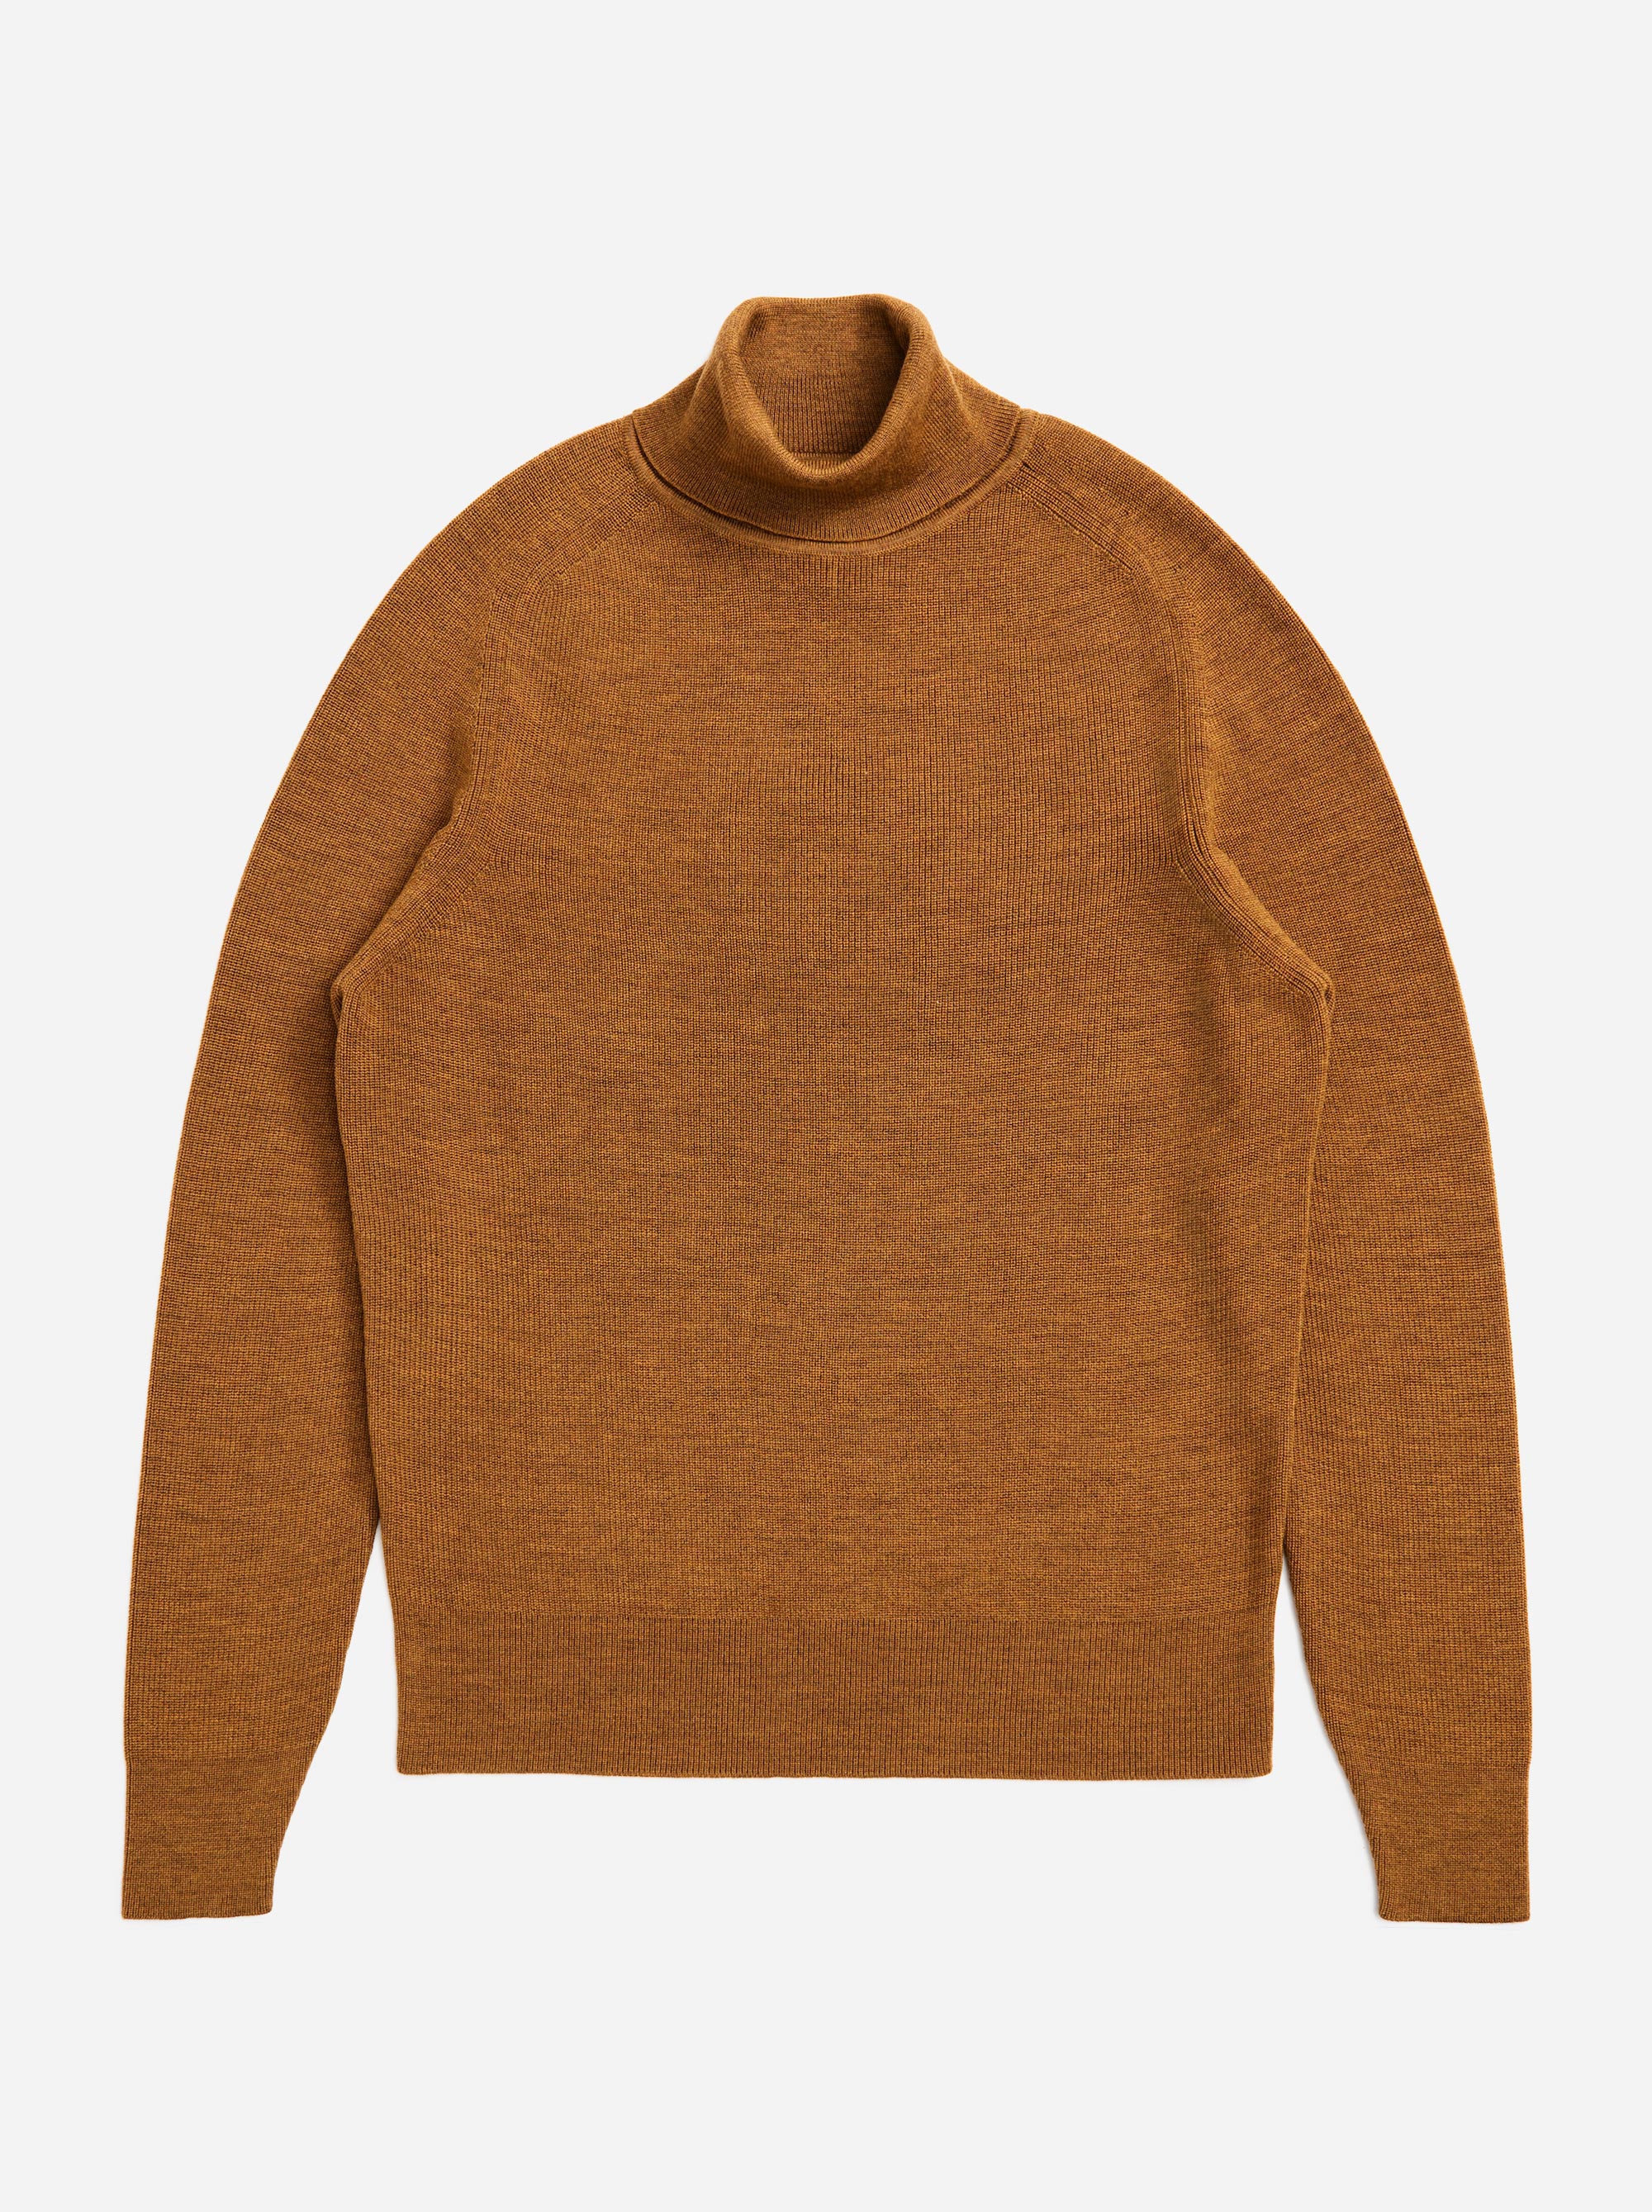 Teym - Turtleneck - The Merino Sweater - Men - Mustard - 5